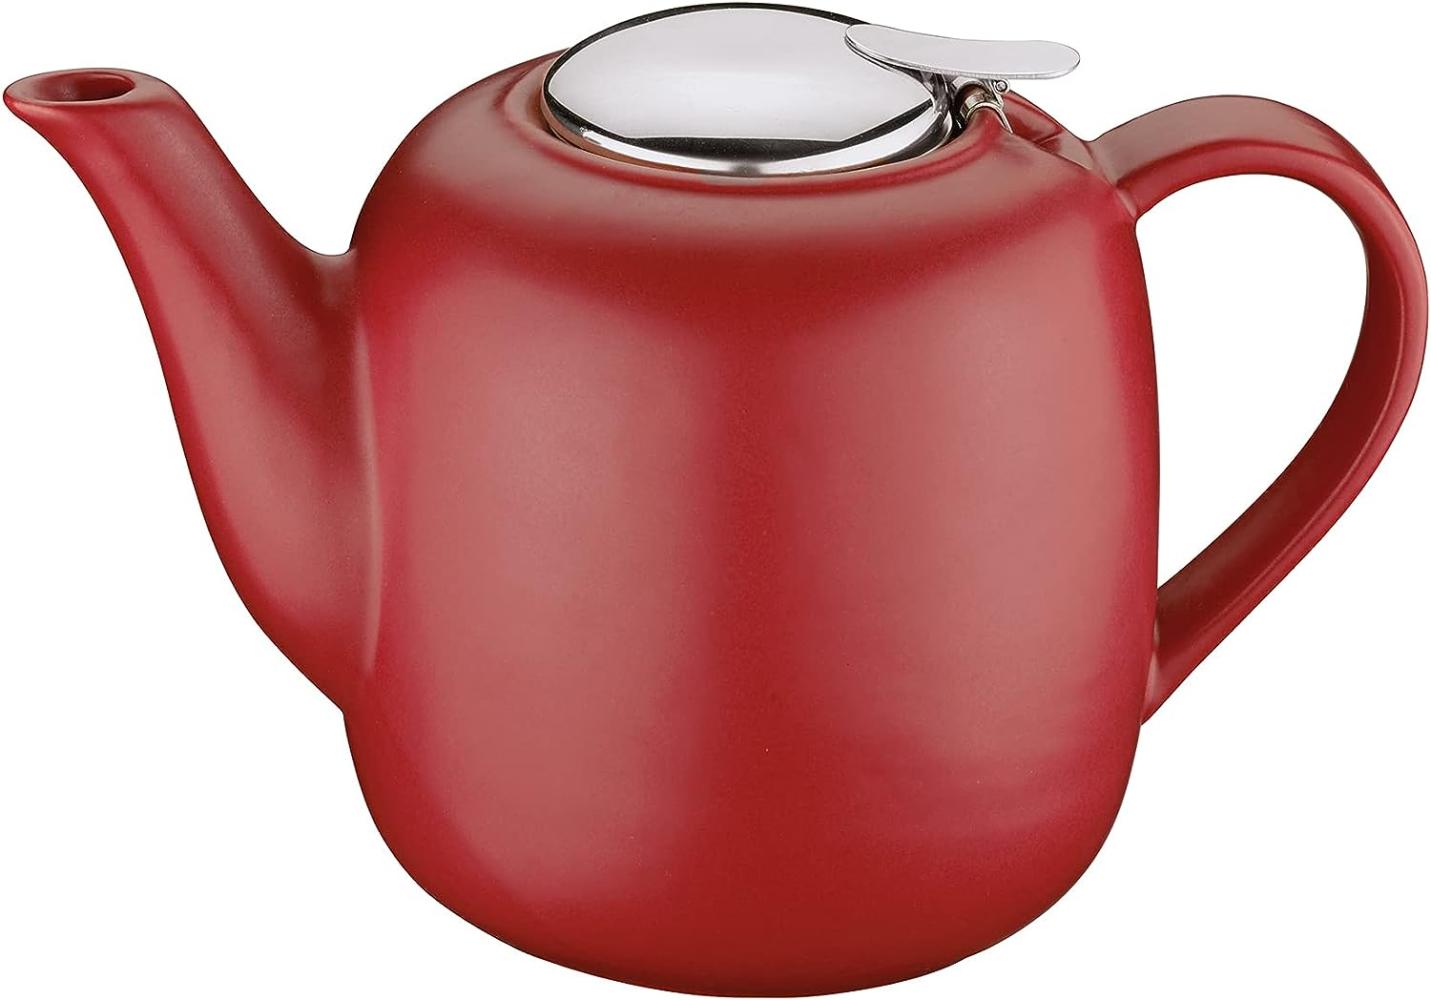 Küchenprofi 'London' Teekanne mit Filtereinsatz, Keramik rot, 1500 ml Bild 1